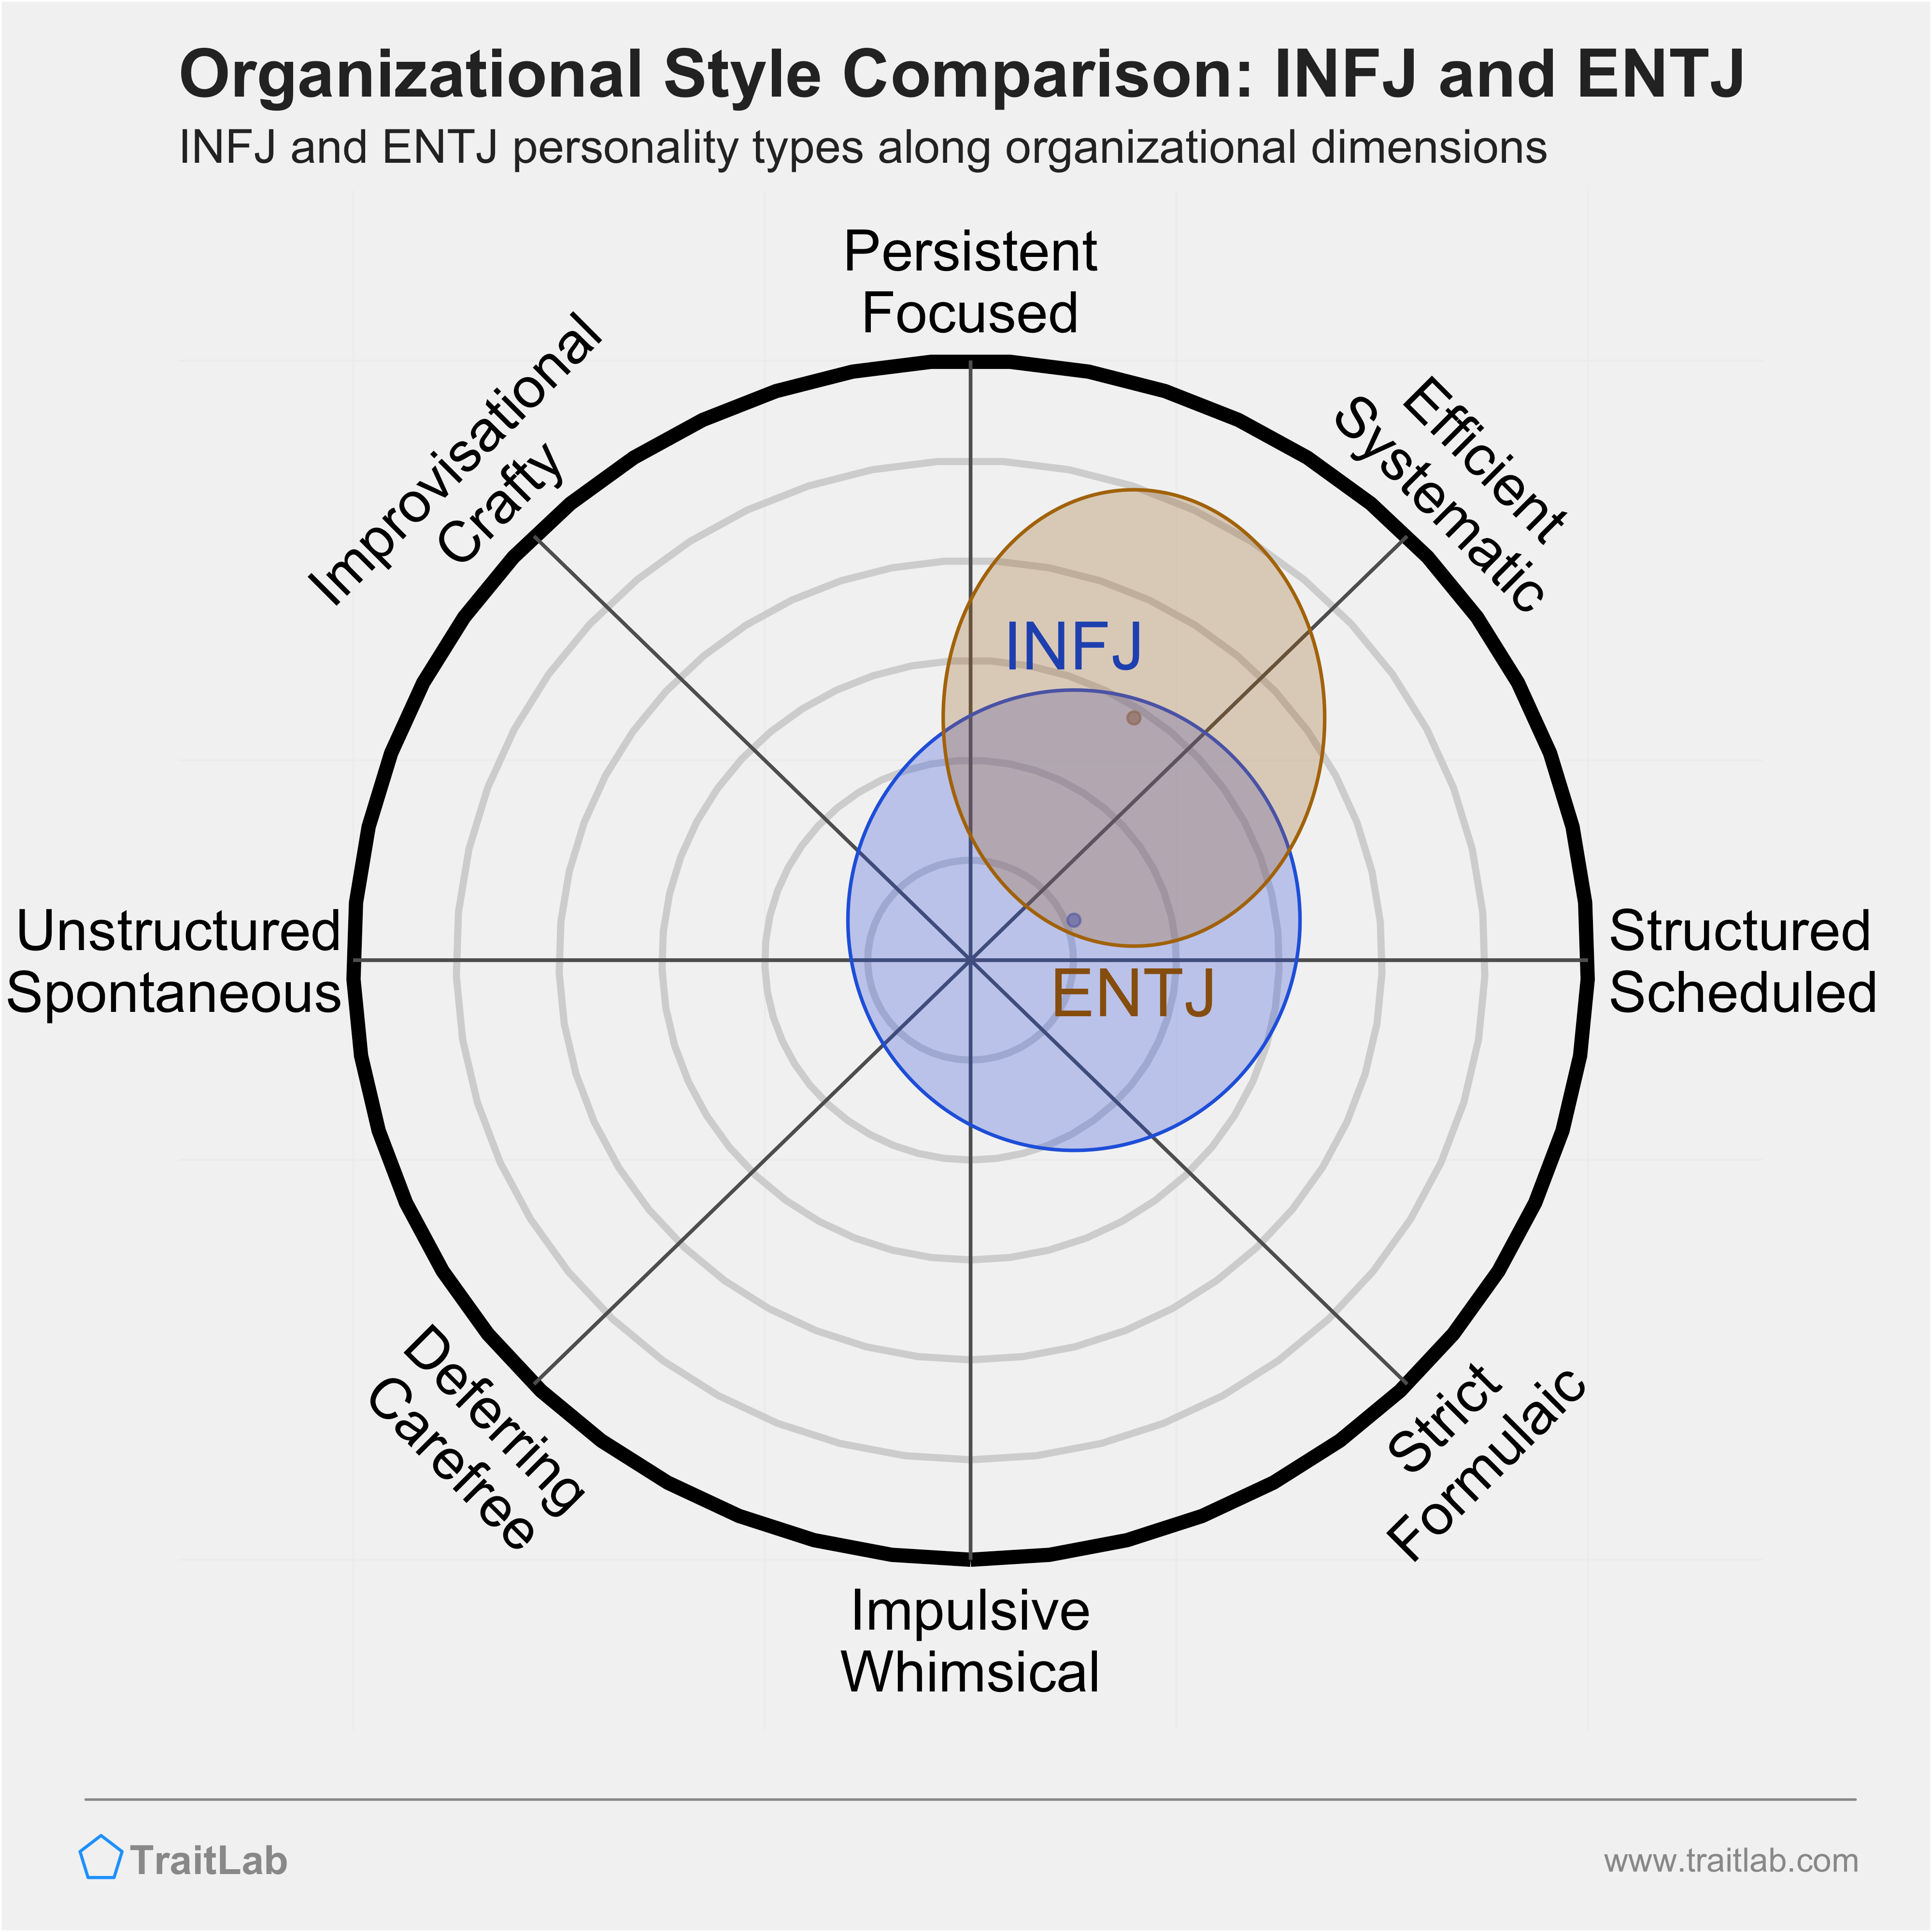 INFJ and ENTJ comparison across organizational dimensions